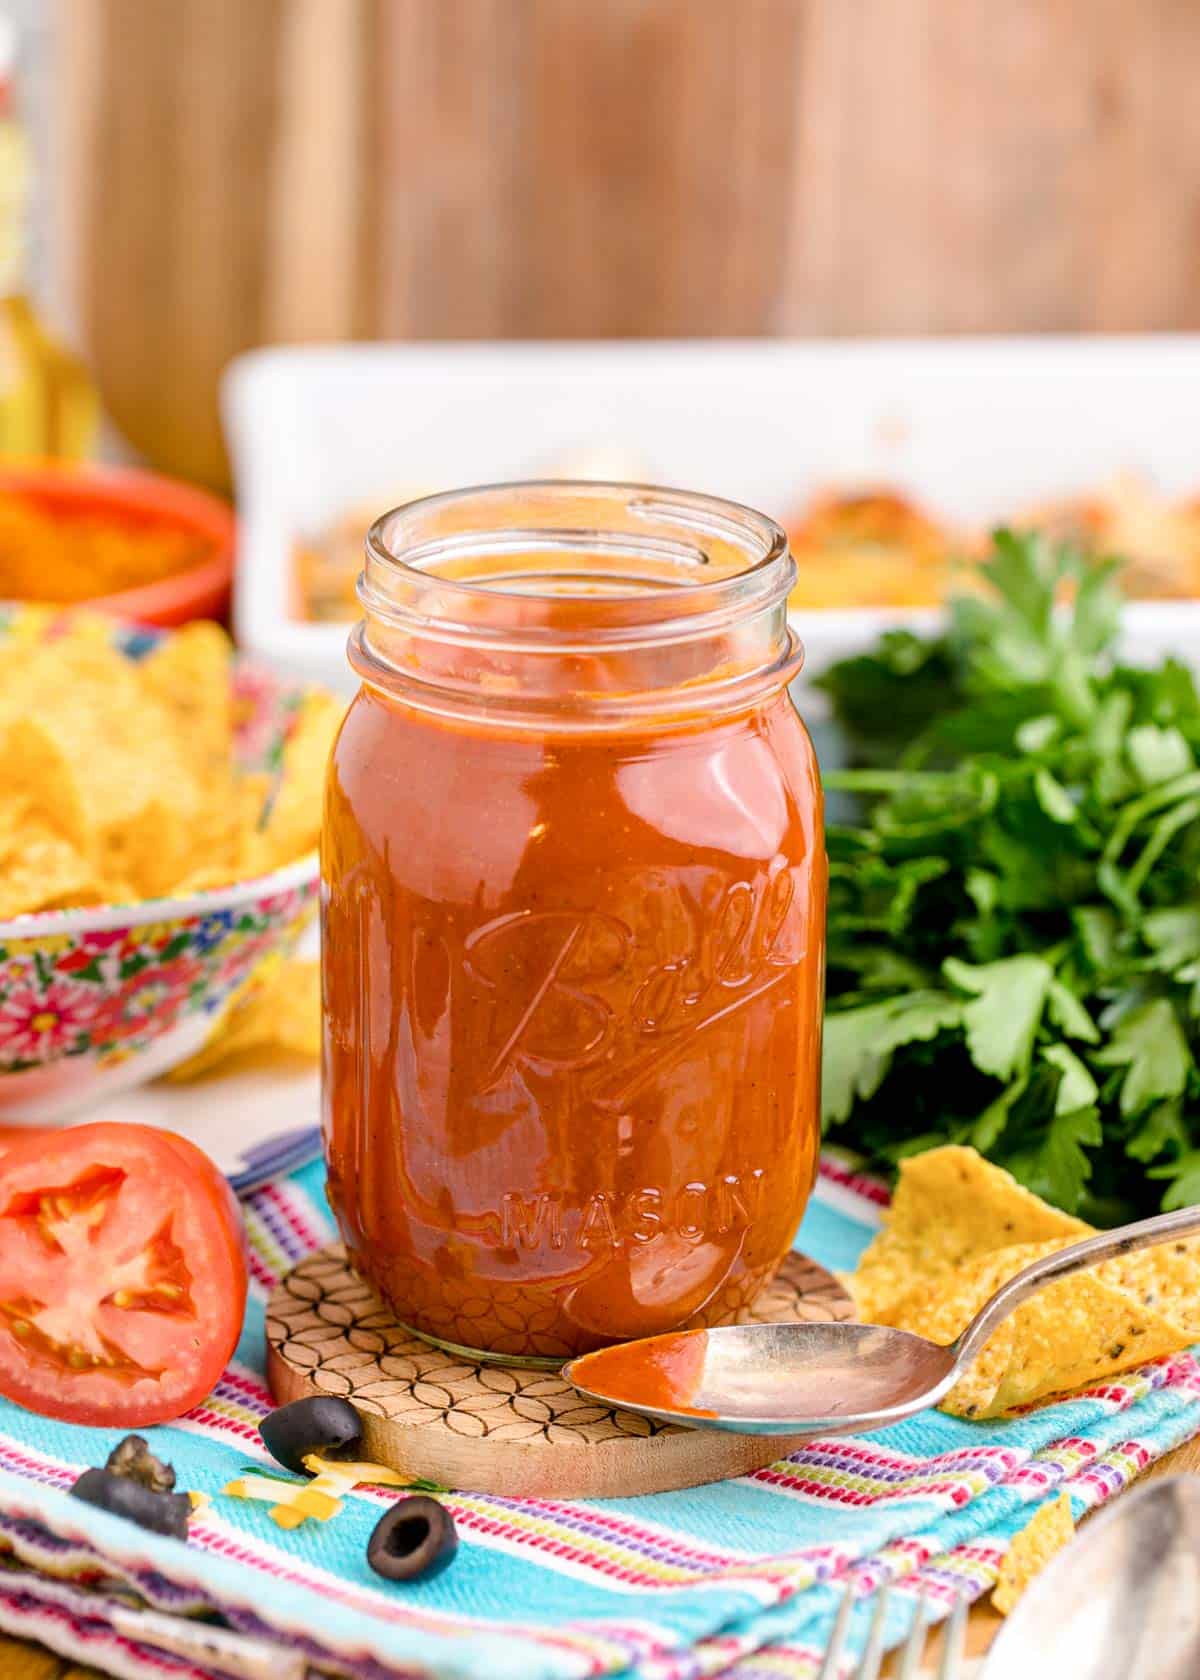 A jar of homemade enchilada sauce on a table.